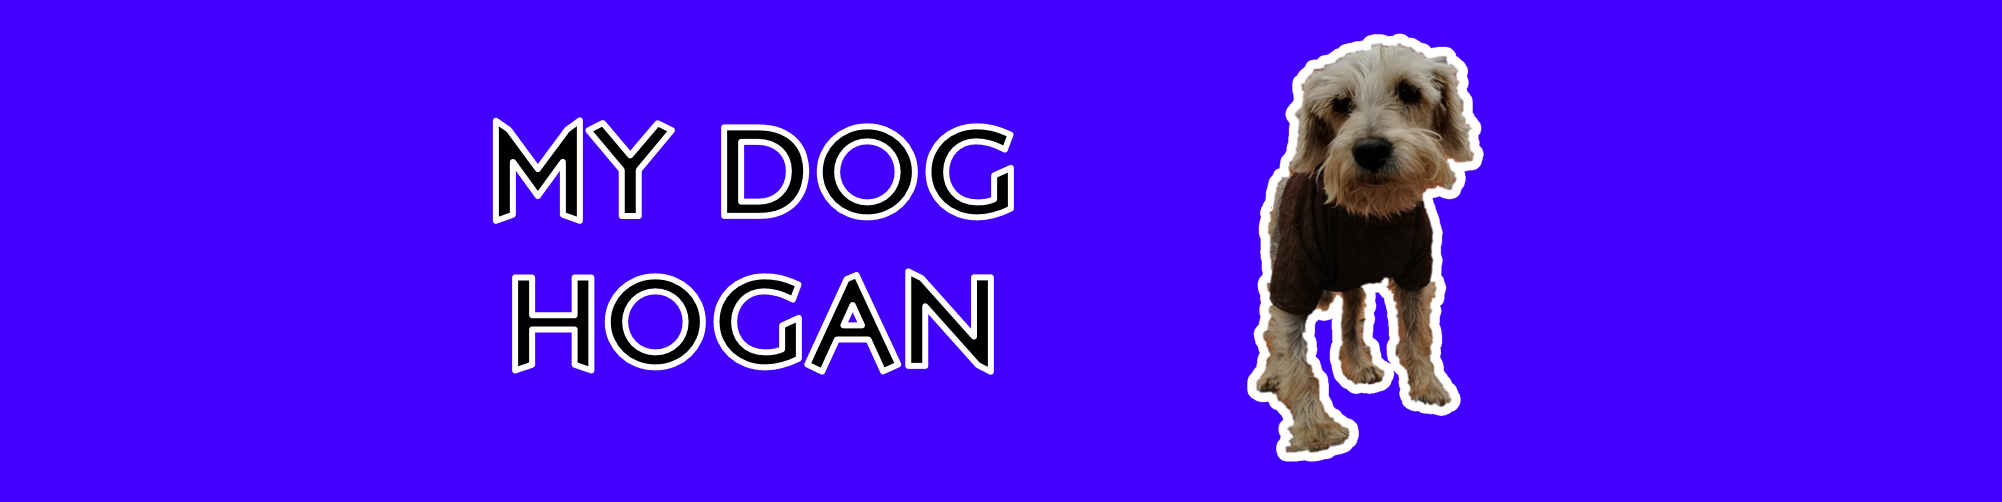 My Dog Hogan